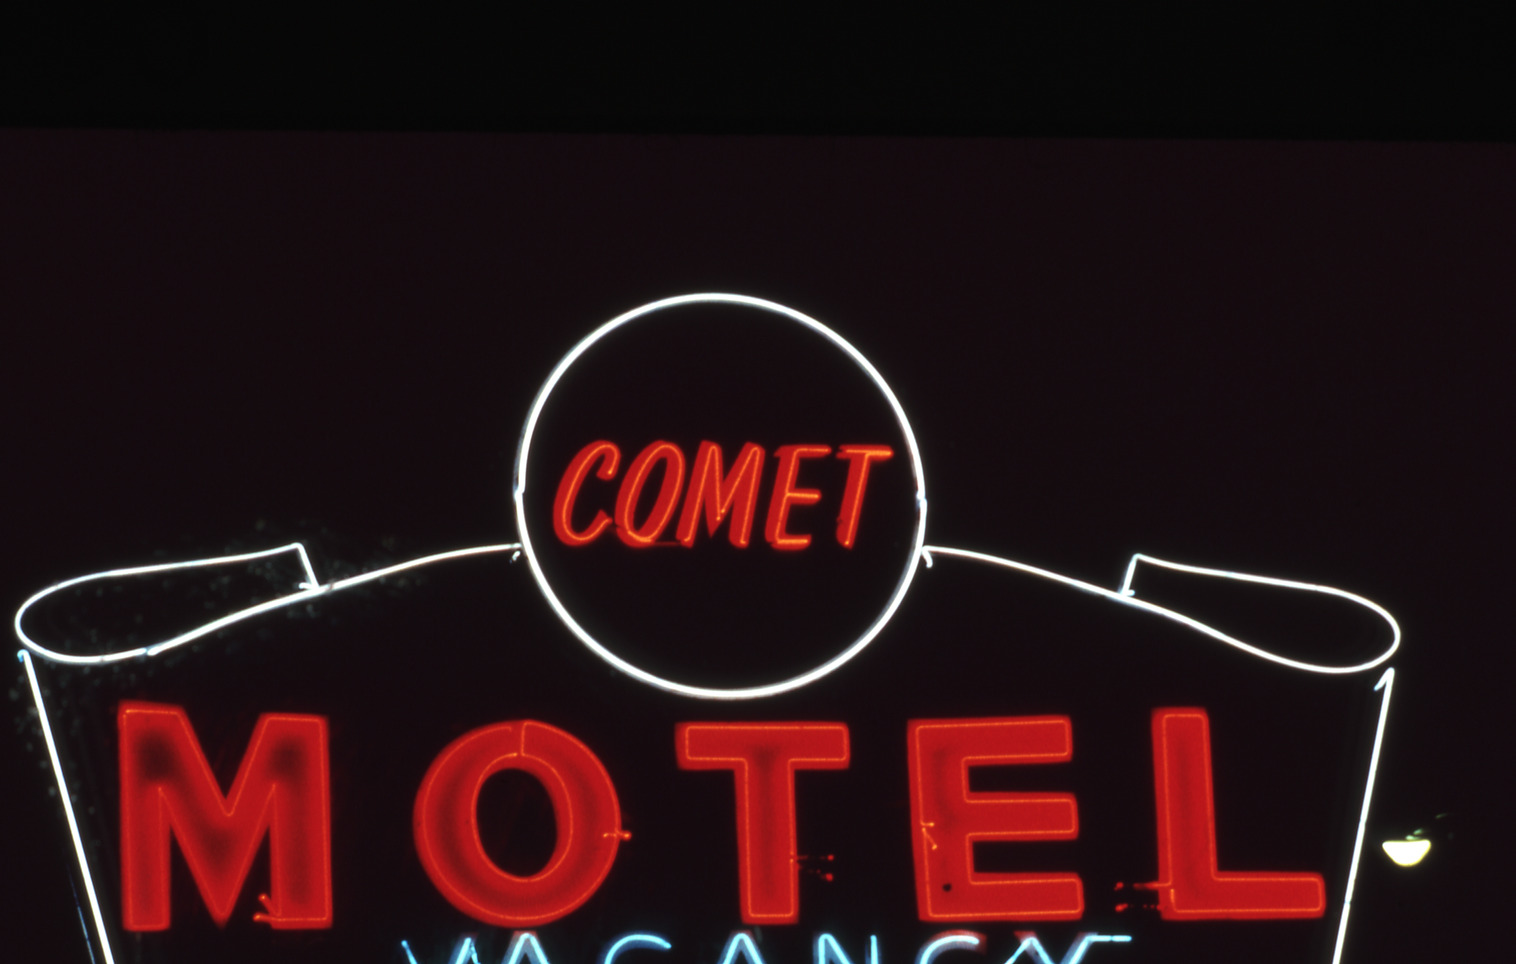 Comet Motel sign, Las Vegas, Nevada: photographic print